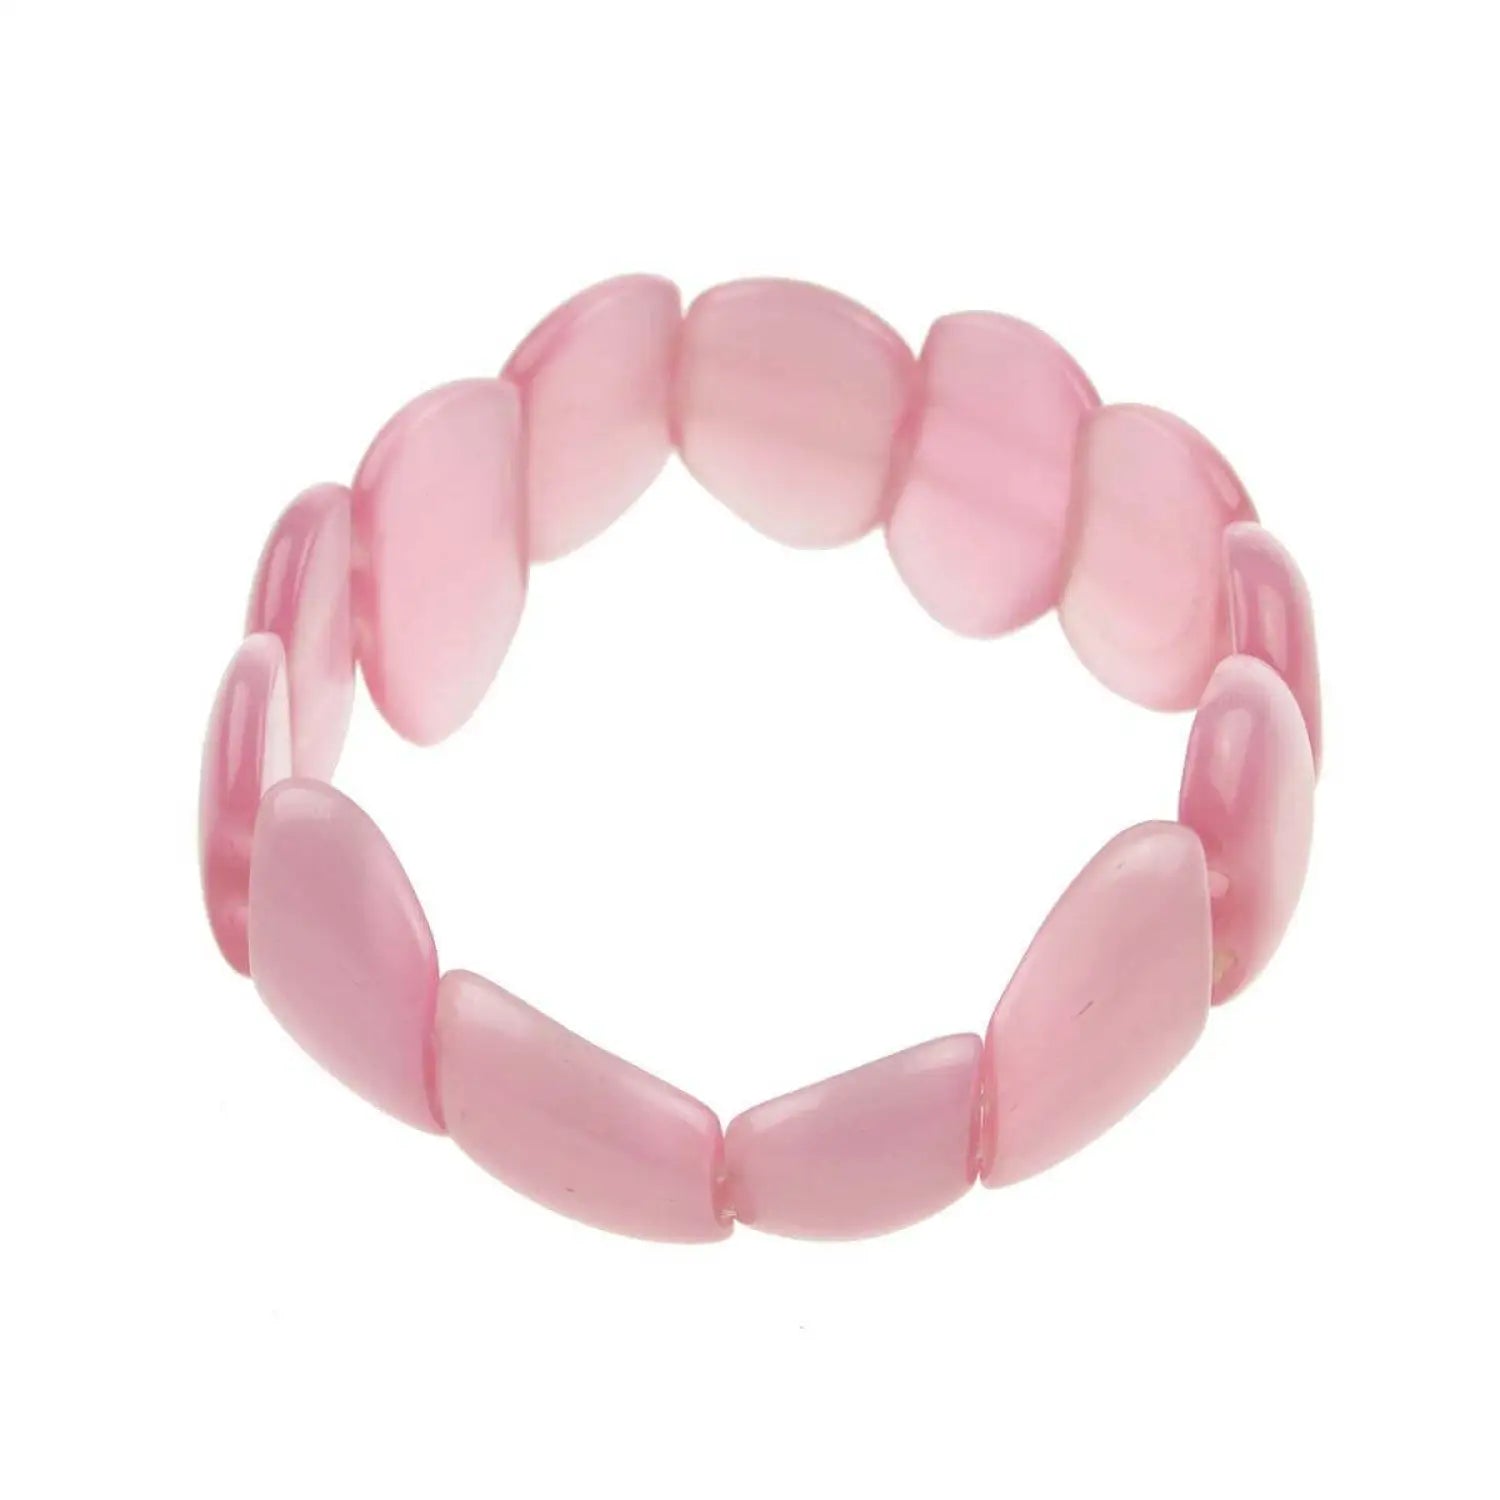 Pastel plastic bead elastic bracelet - versatile accessory for every occasion.